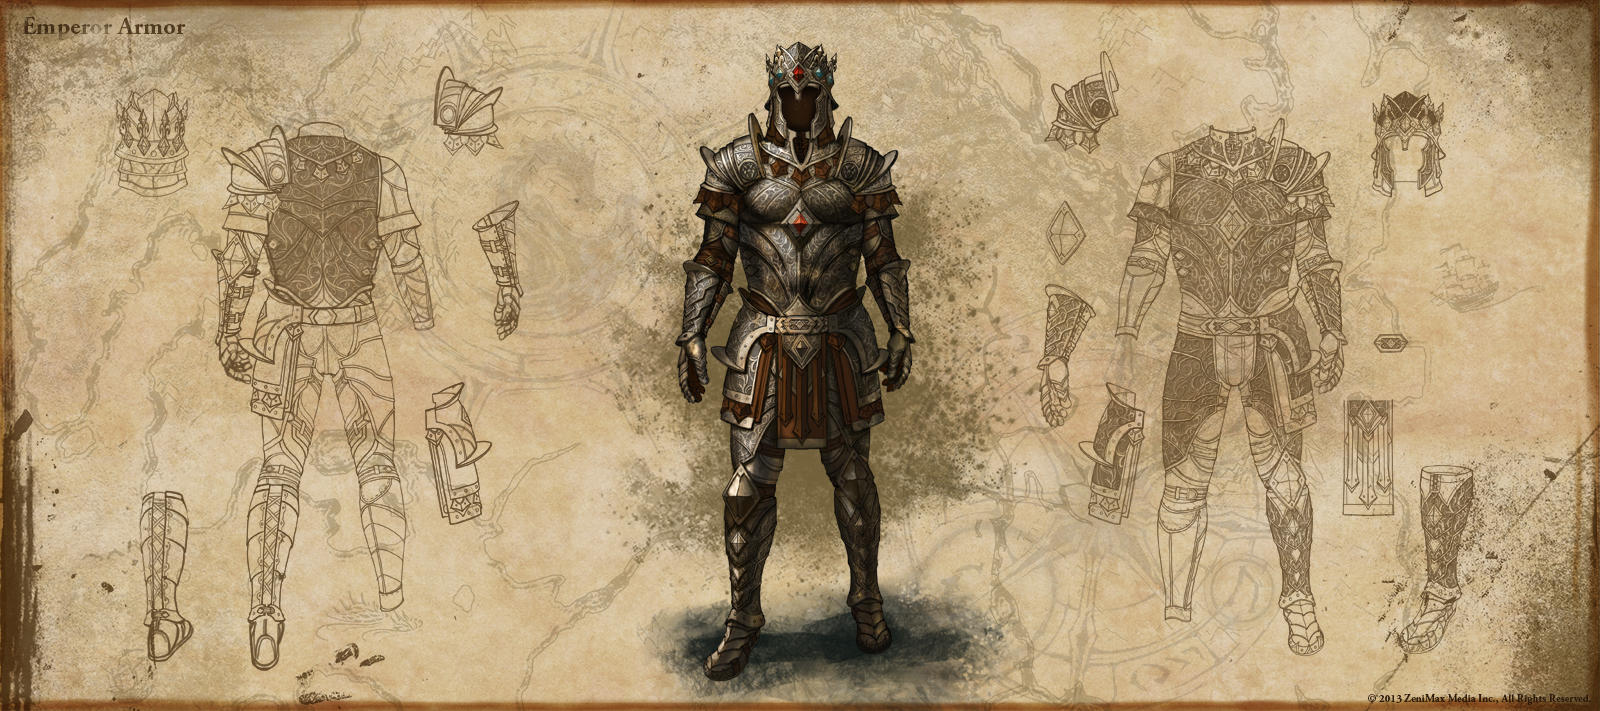 The Elder Scrolls Online Emperor’s Armor Revealed